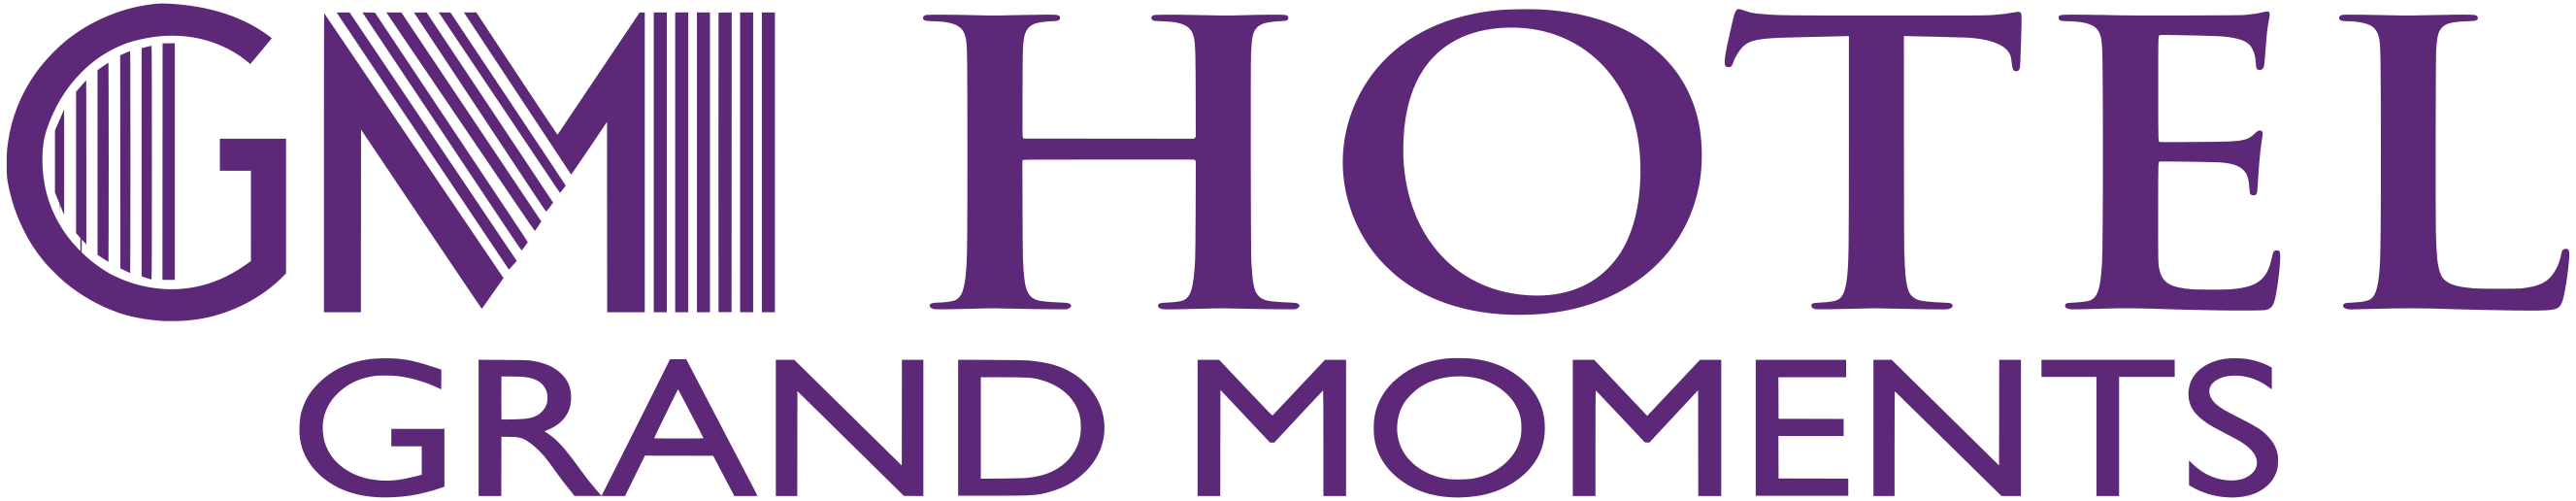 GM Hotel Grand Moments logo